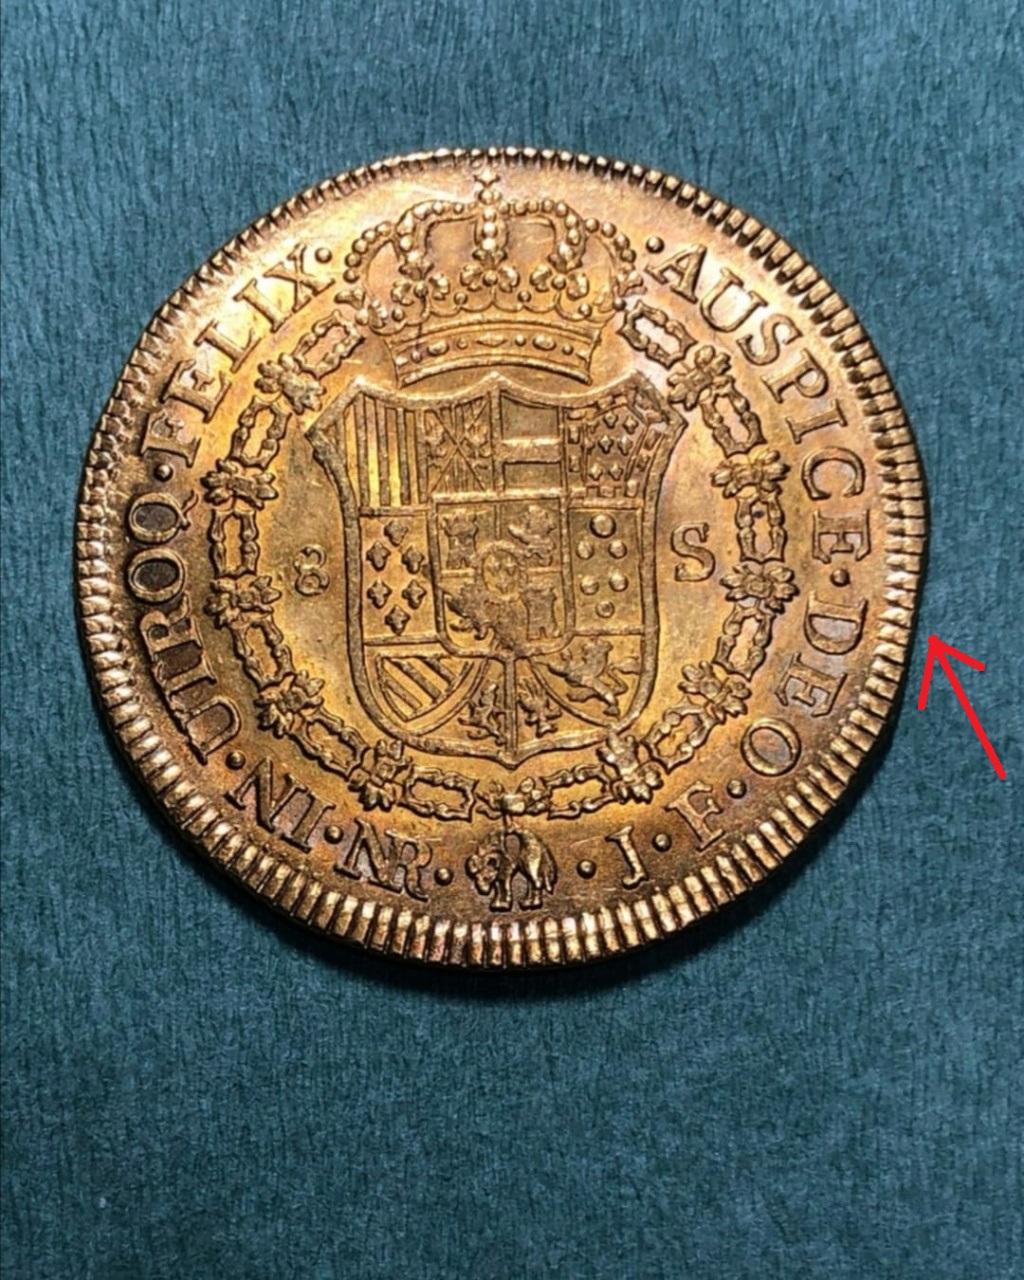 8 Escudos de Fernando VII de 1817 - Autentica? Whats110